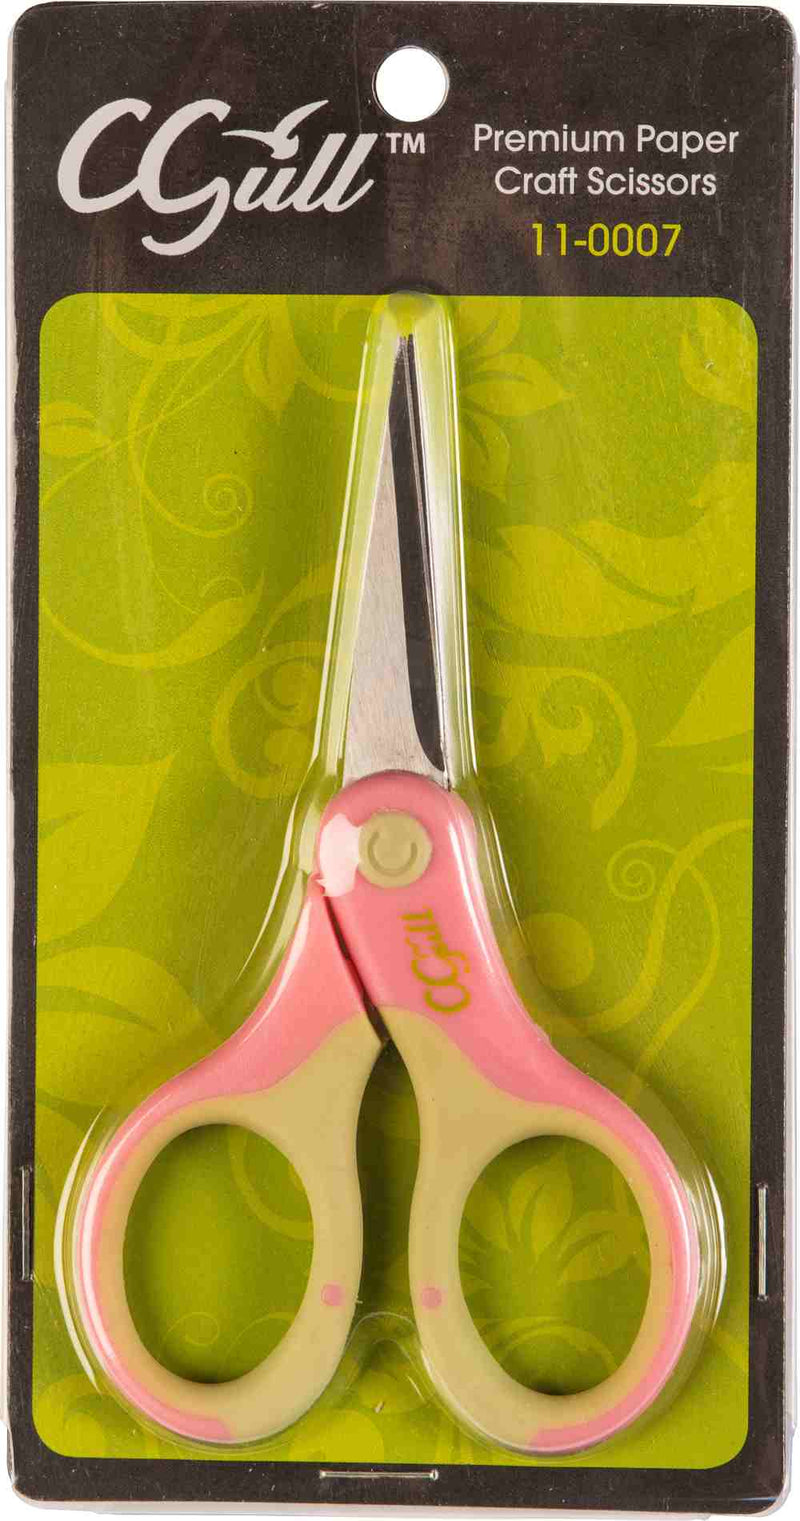 CGull Craft Scissors - Pink/Green